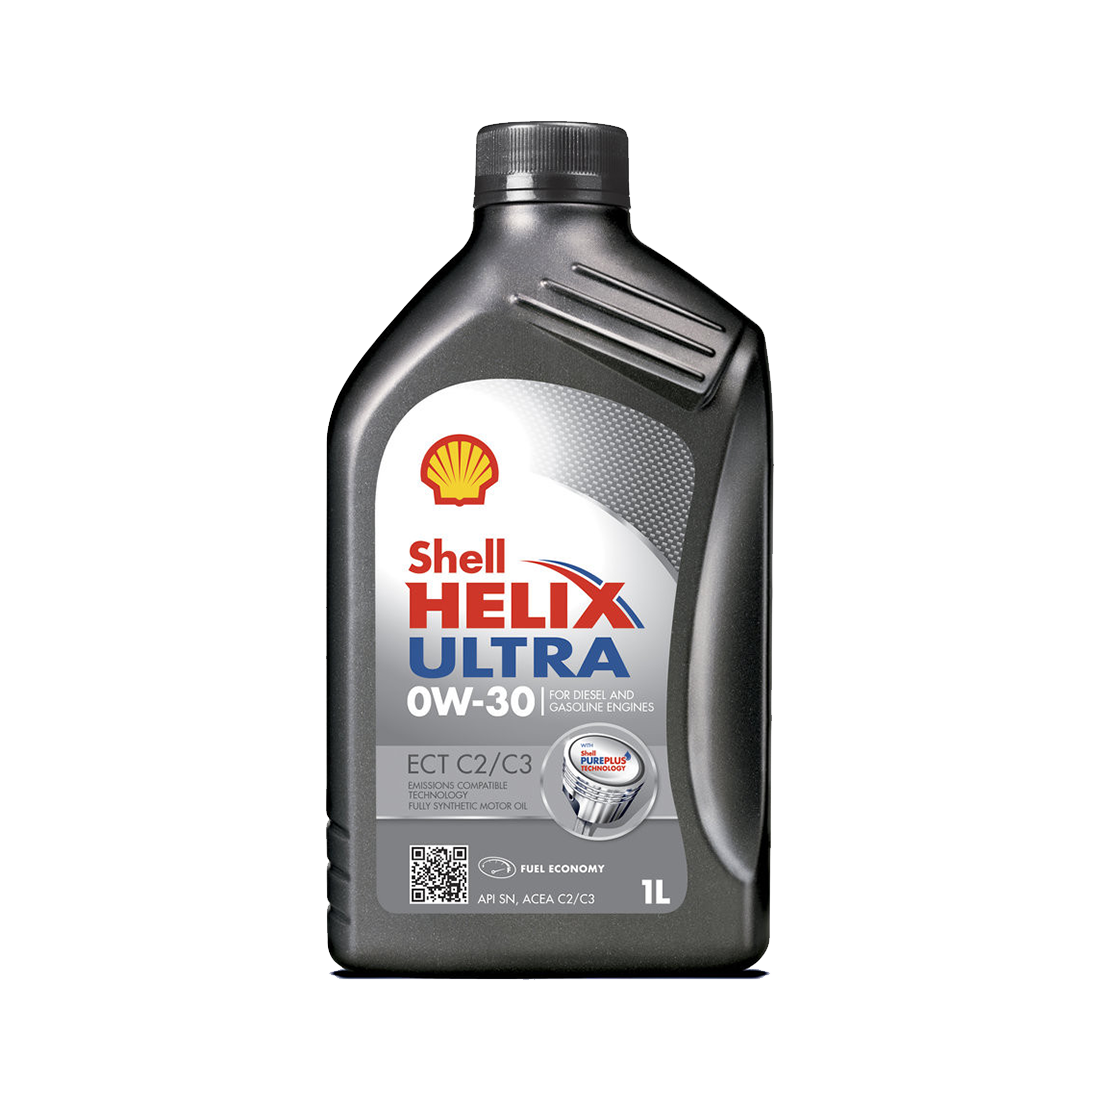 Syntetiskolja Shell Helix Ultra ECT C2/C3 0W-30, 1L